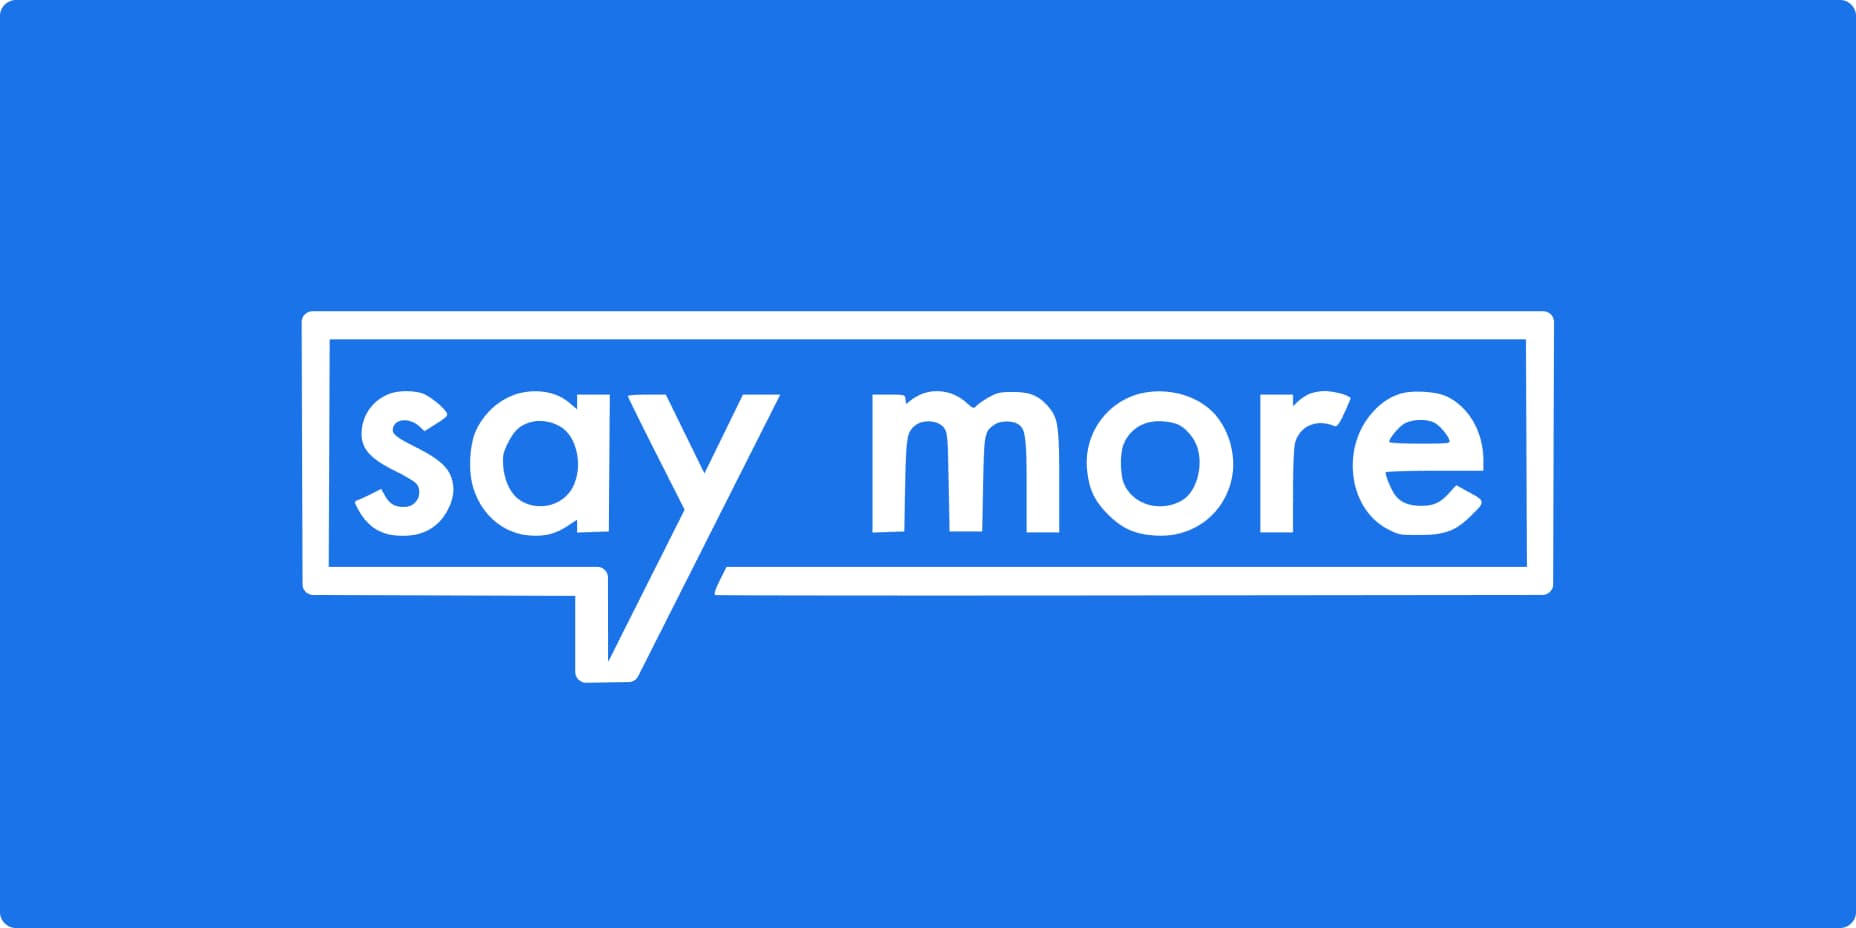 Saymore Logo